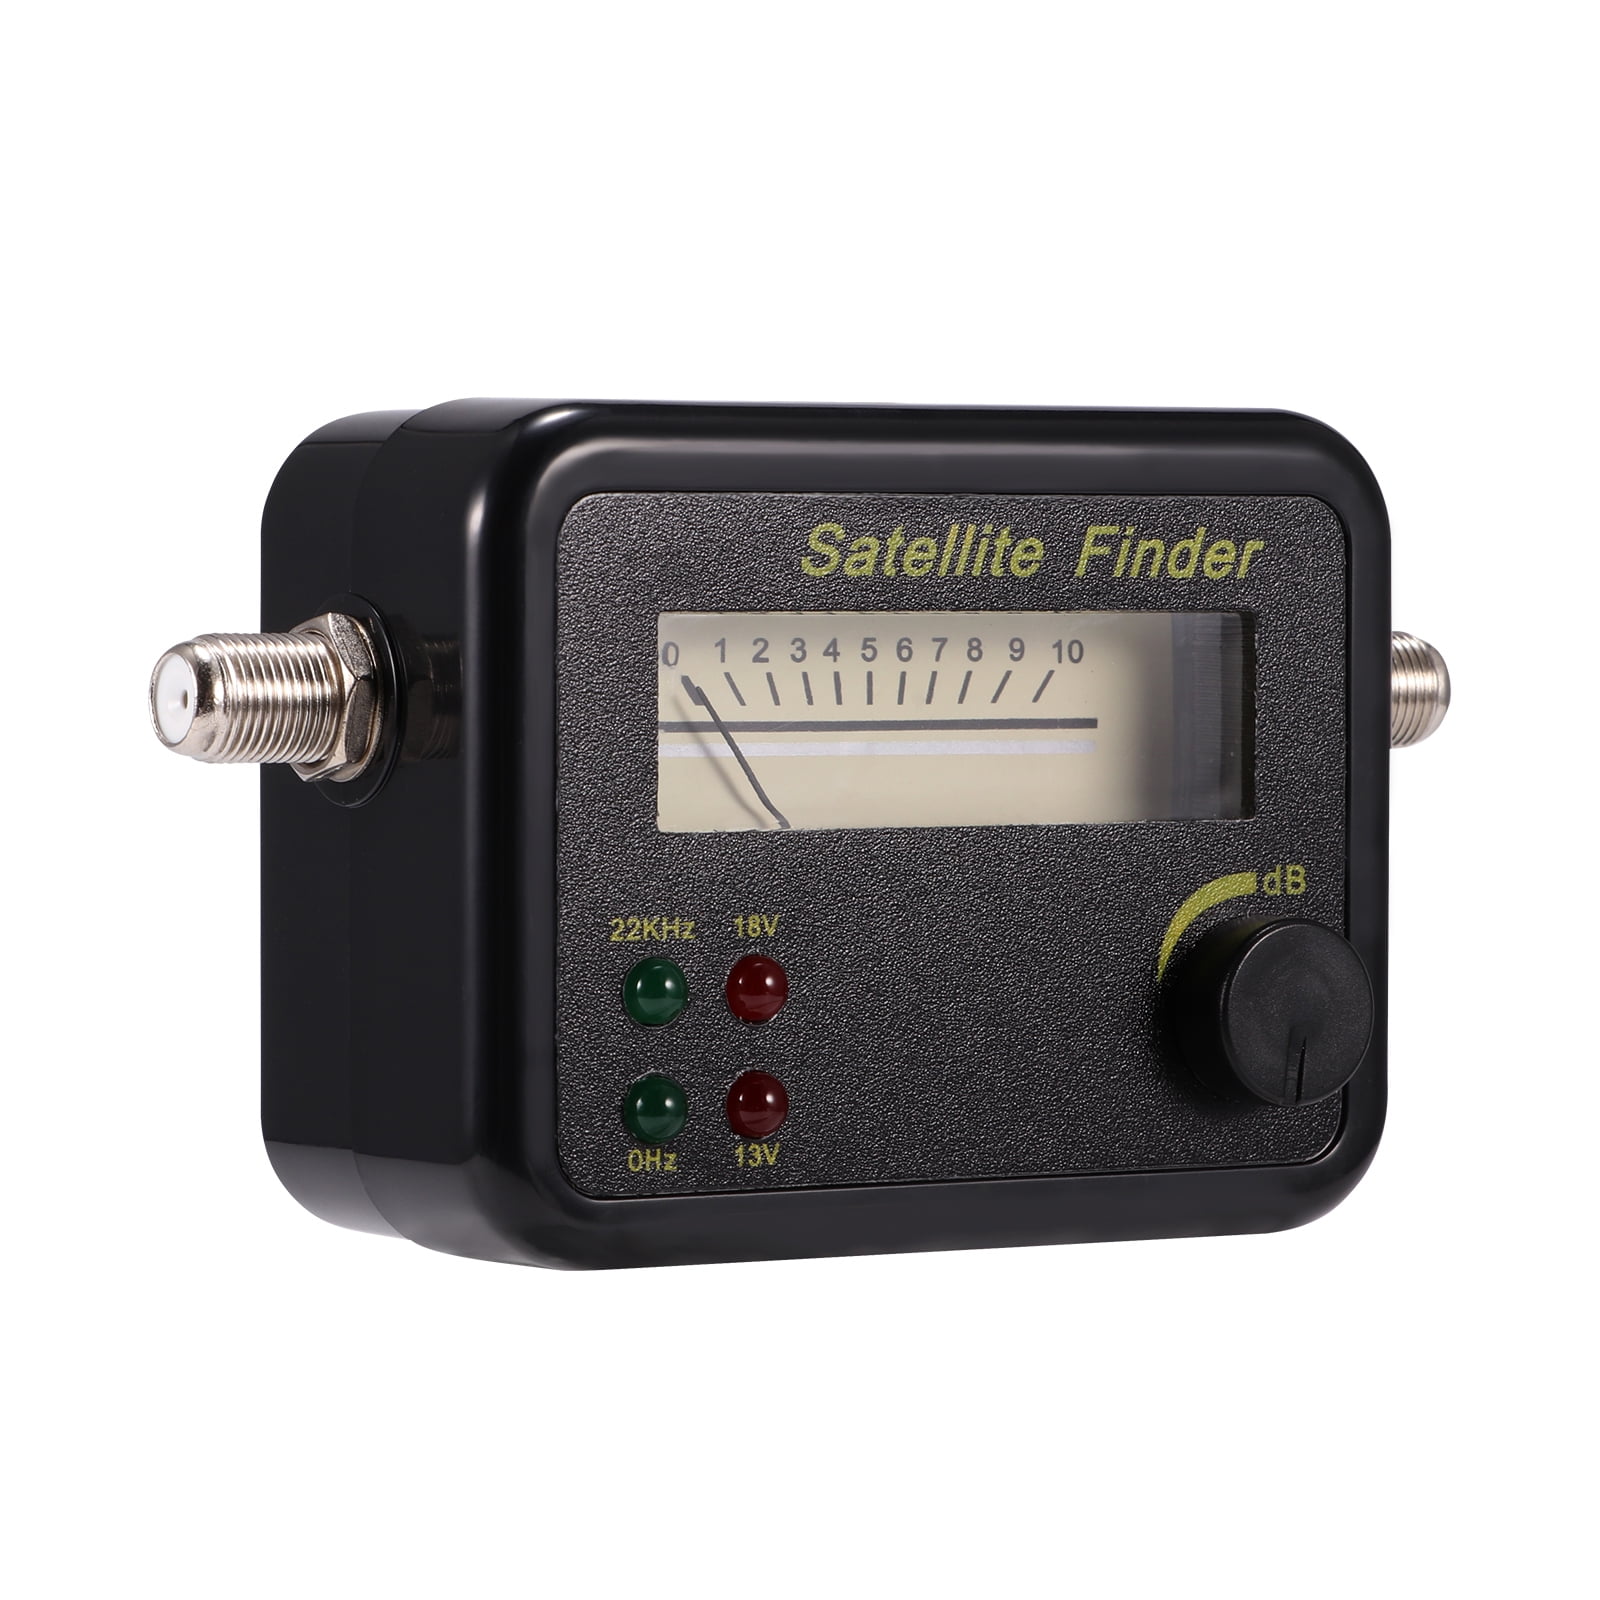 Digital Satellite Finder Signal Strength Meter High Accuracy Satellite Rangefinder with Indicator Light